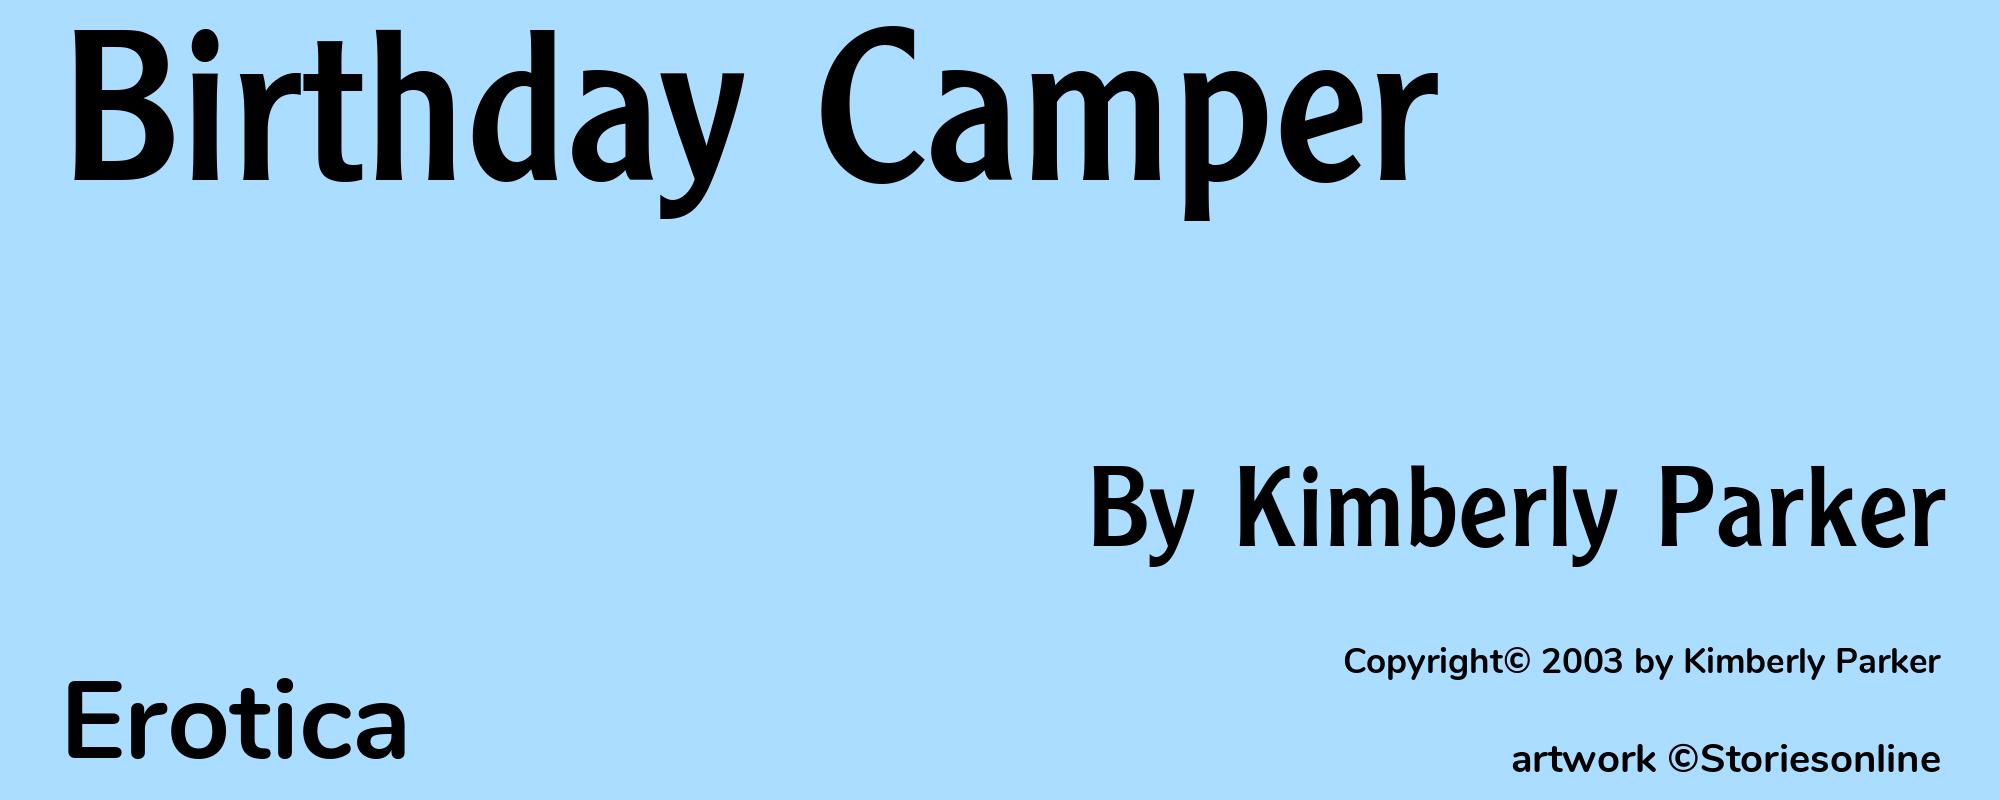 Birthday Camper - Cover